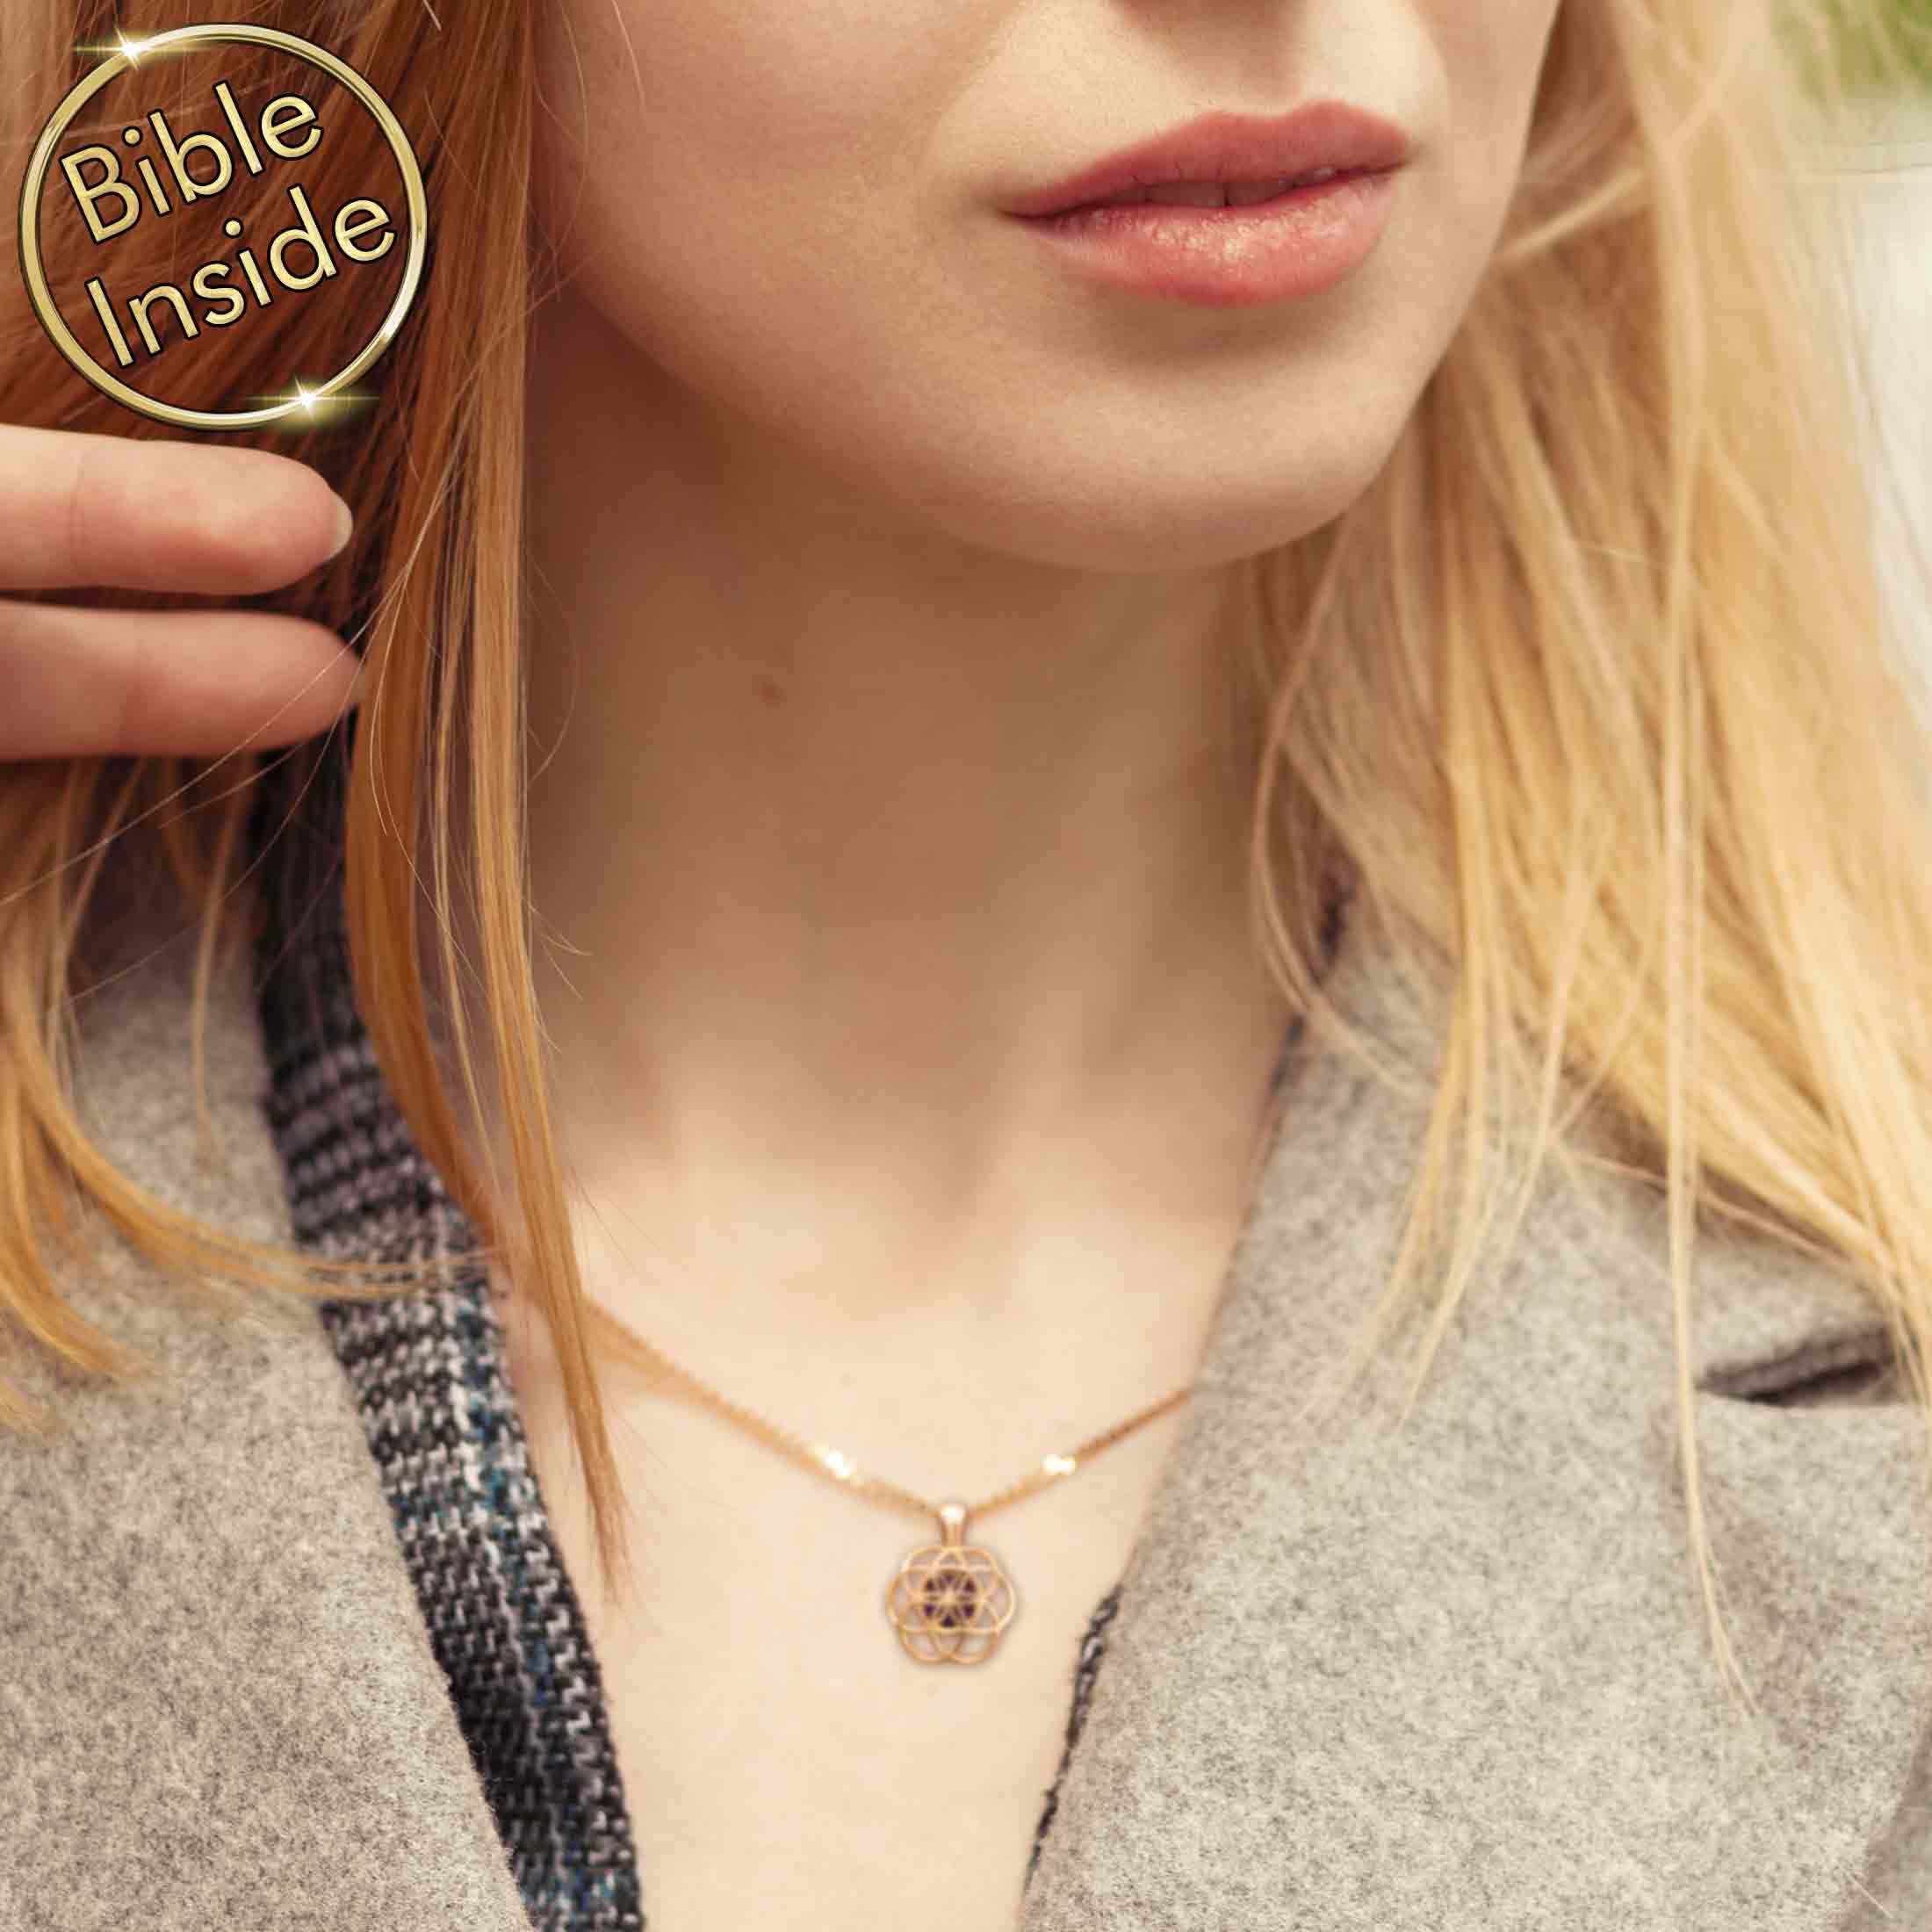 Women's Bible Necklace - Nano Jewelry